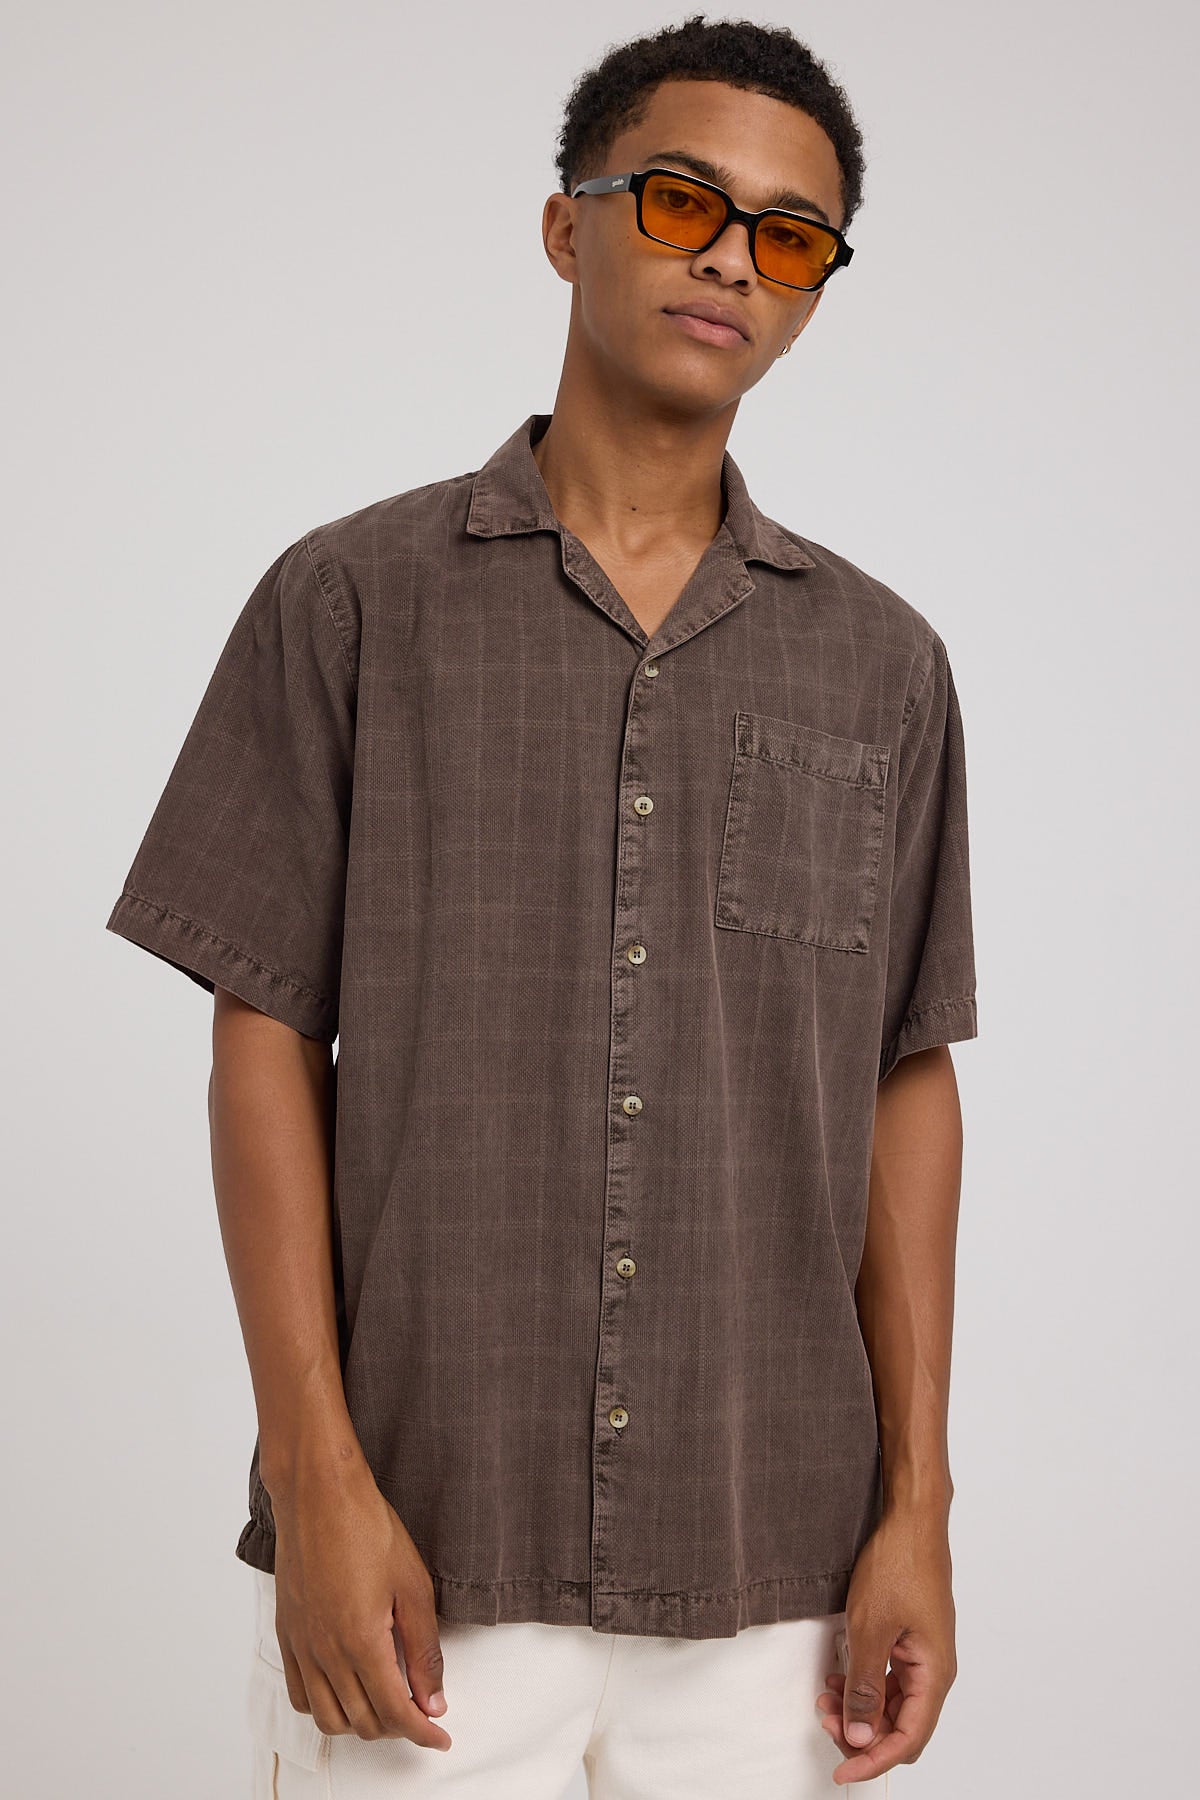 Rolla's Tile Cord Bowler Shirt Brown